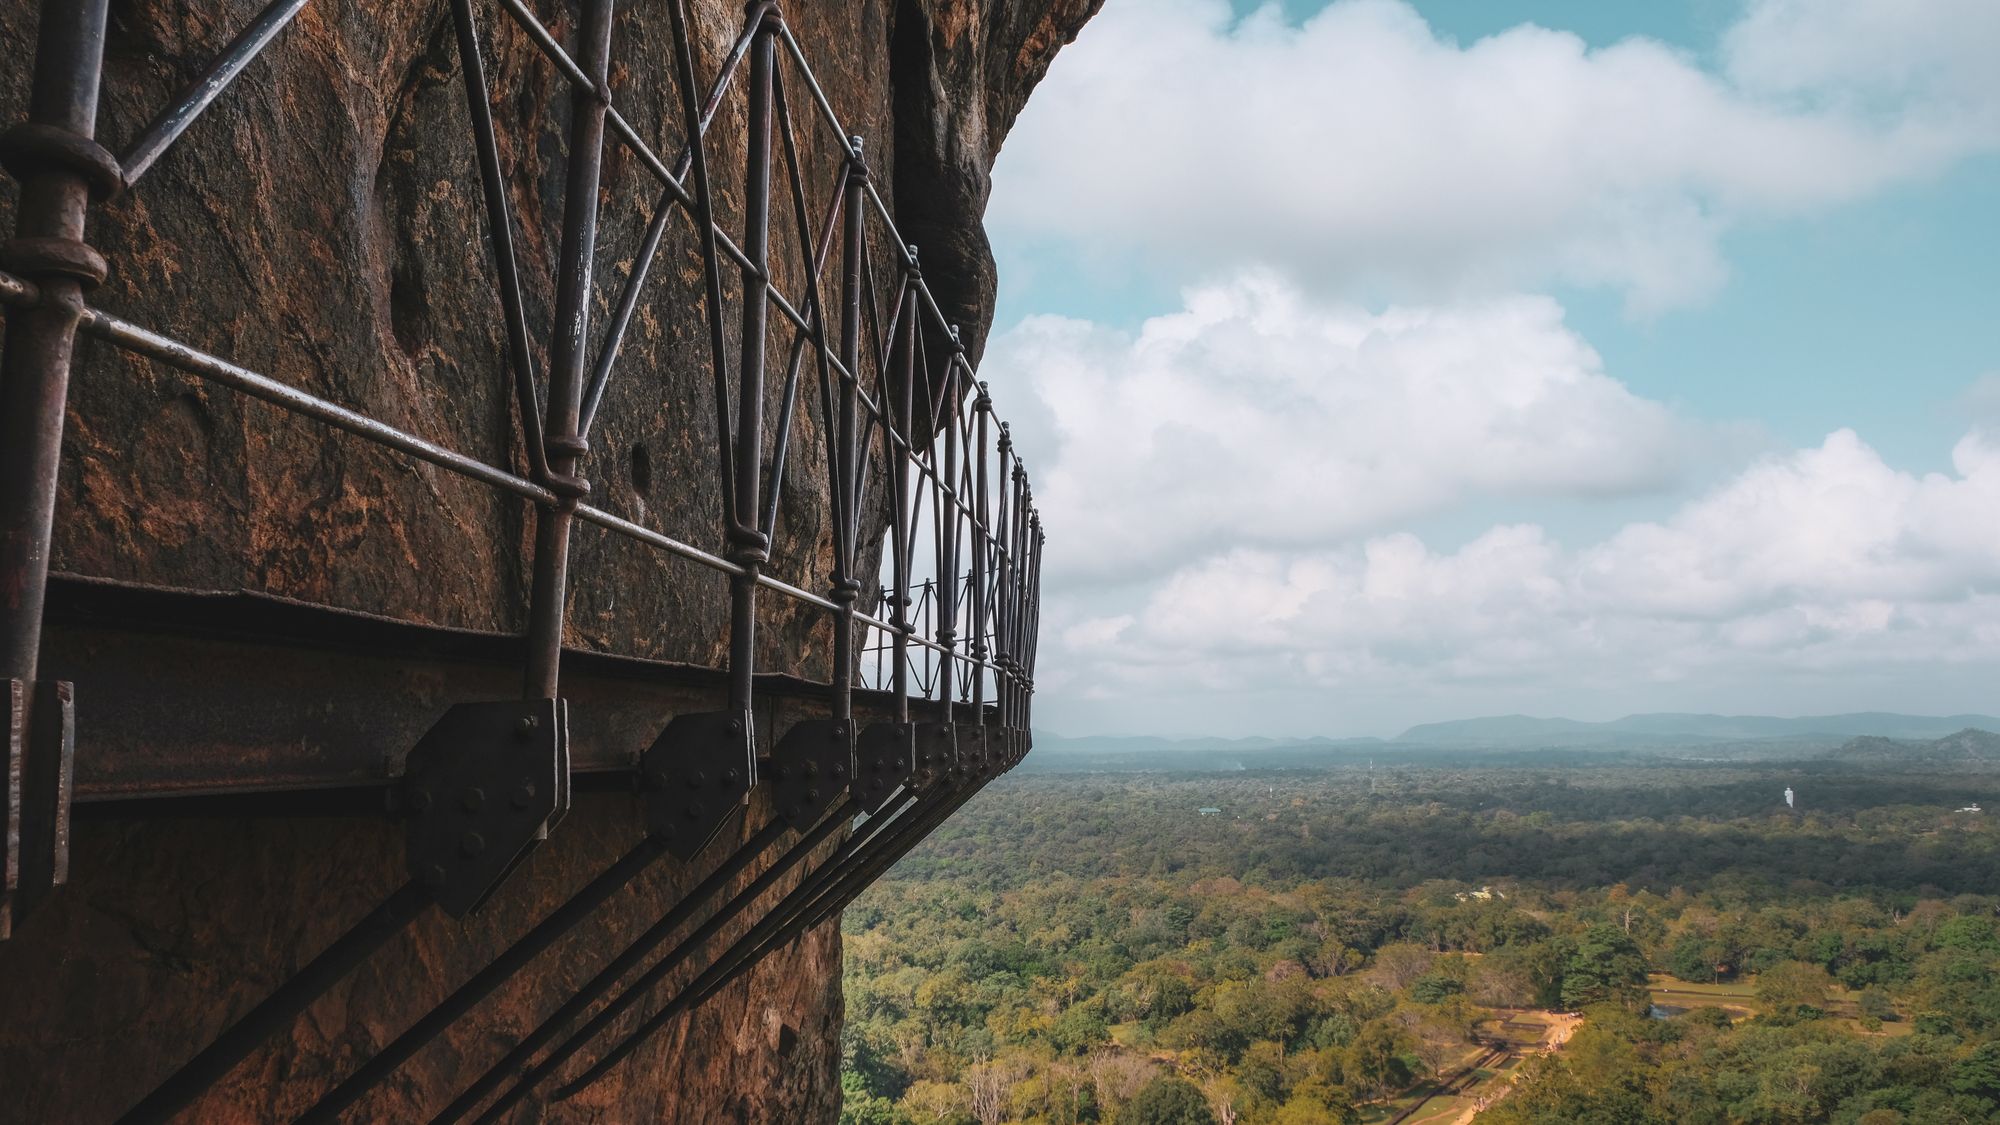 The surroundings of Sigiriya Rock, Sri Lanka, captured on a photo mid-way through the climb.